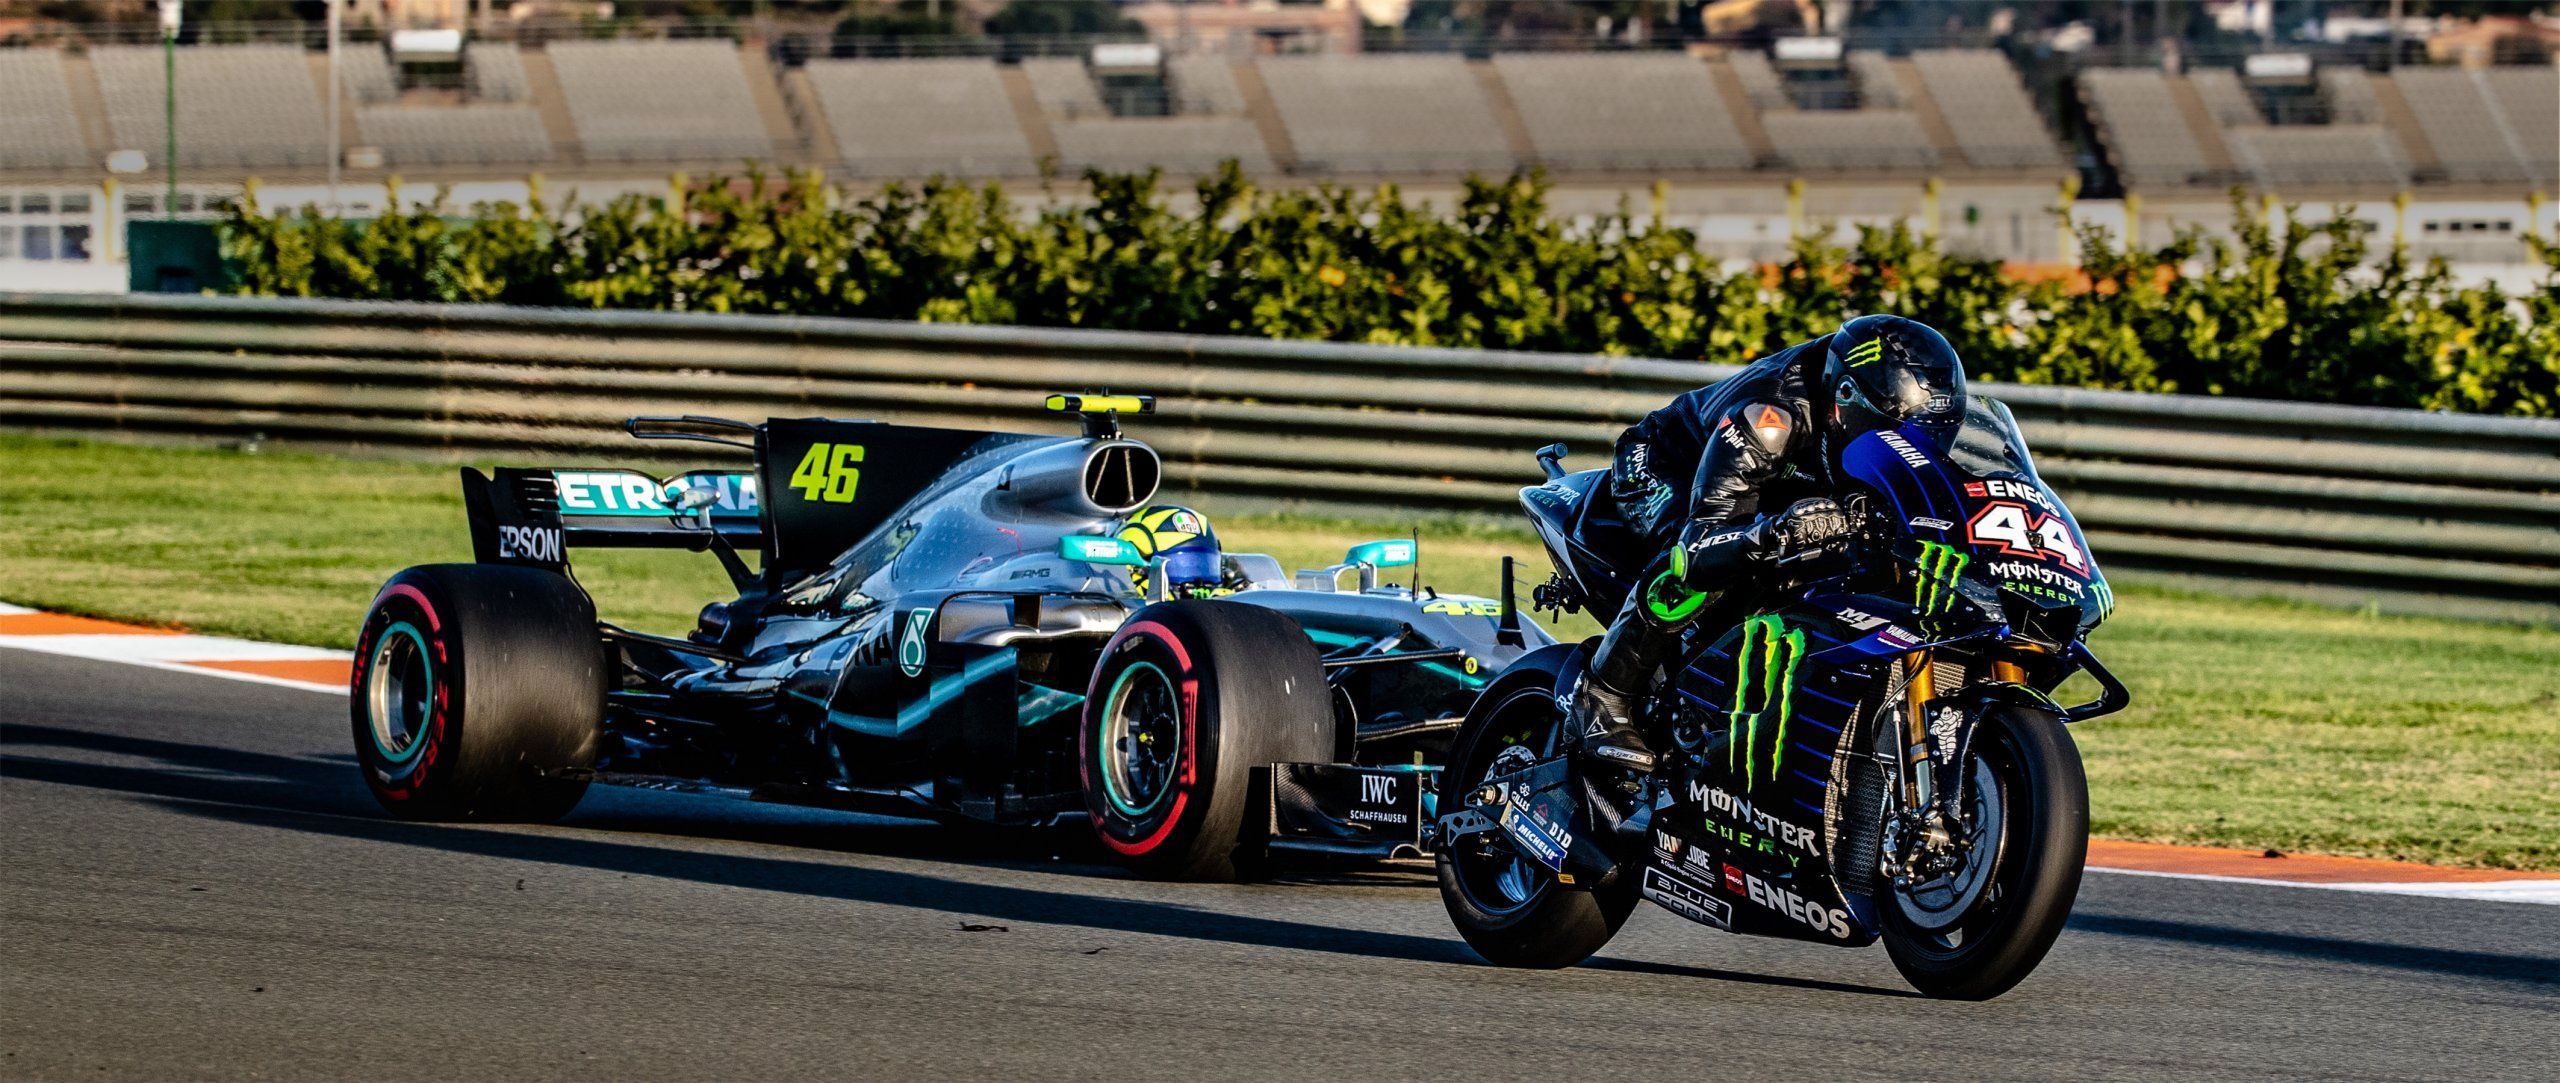 Lewis Hamilton and Valentino Rossi Swap Machinery